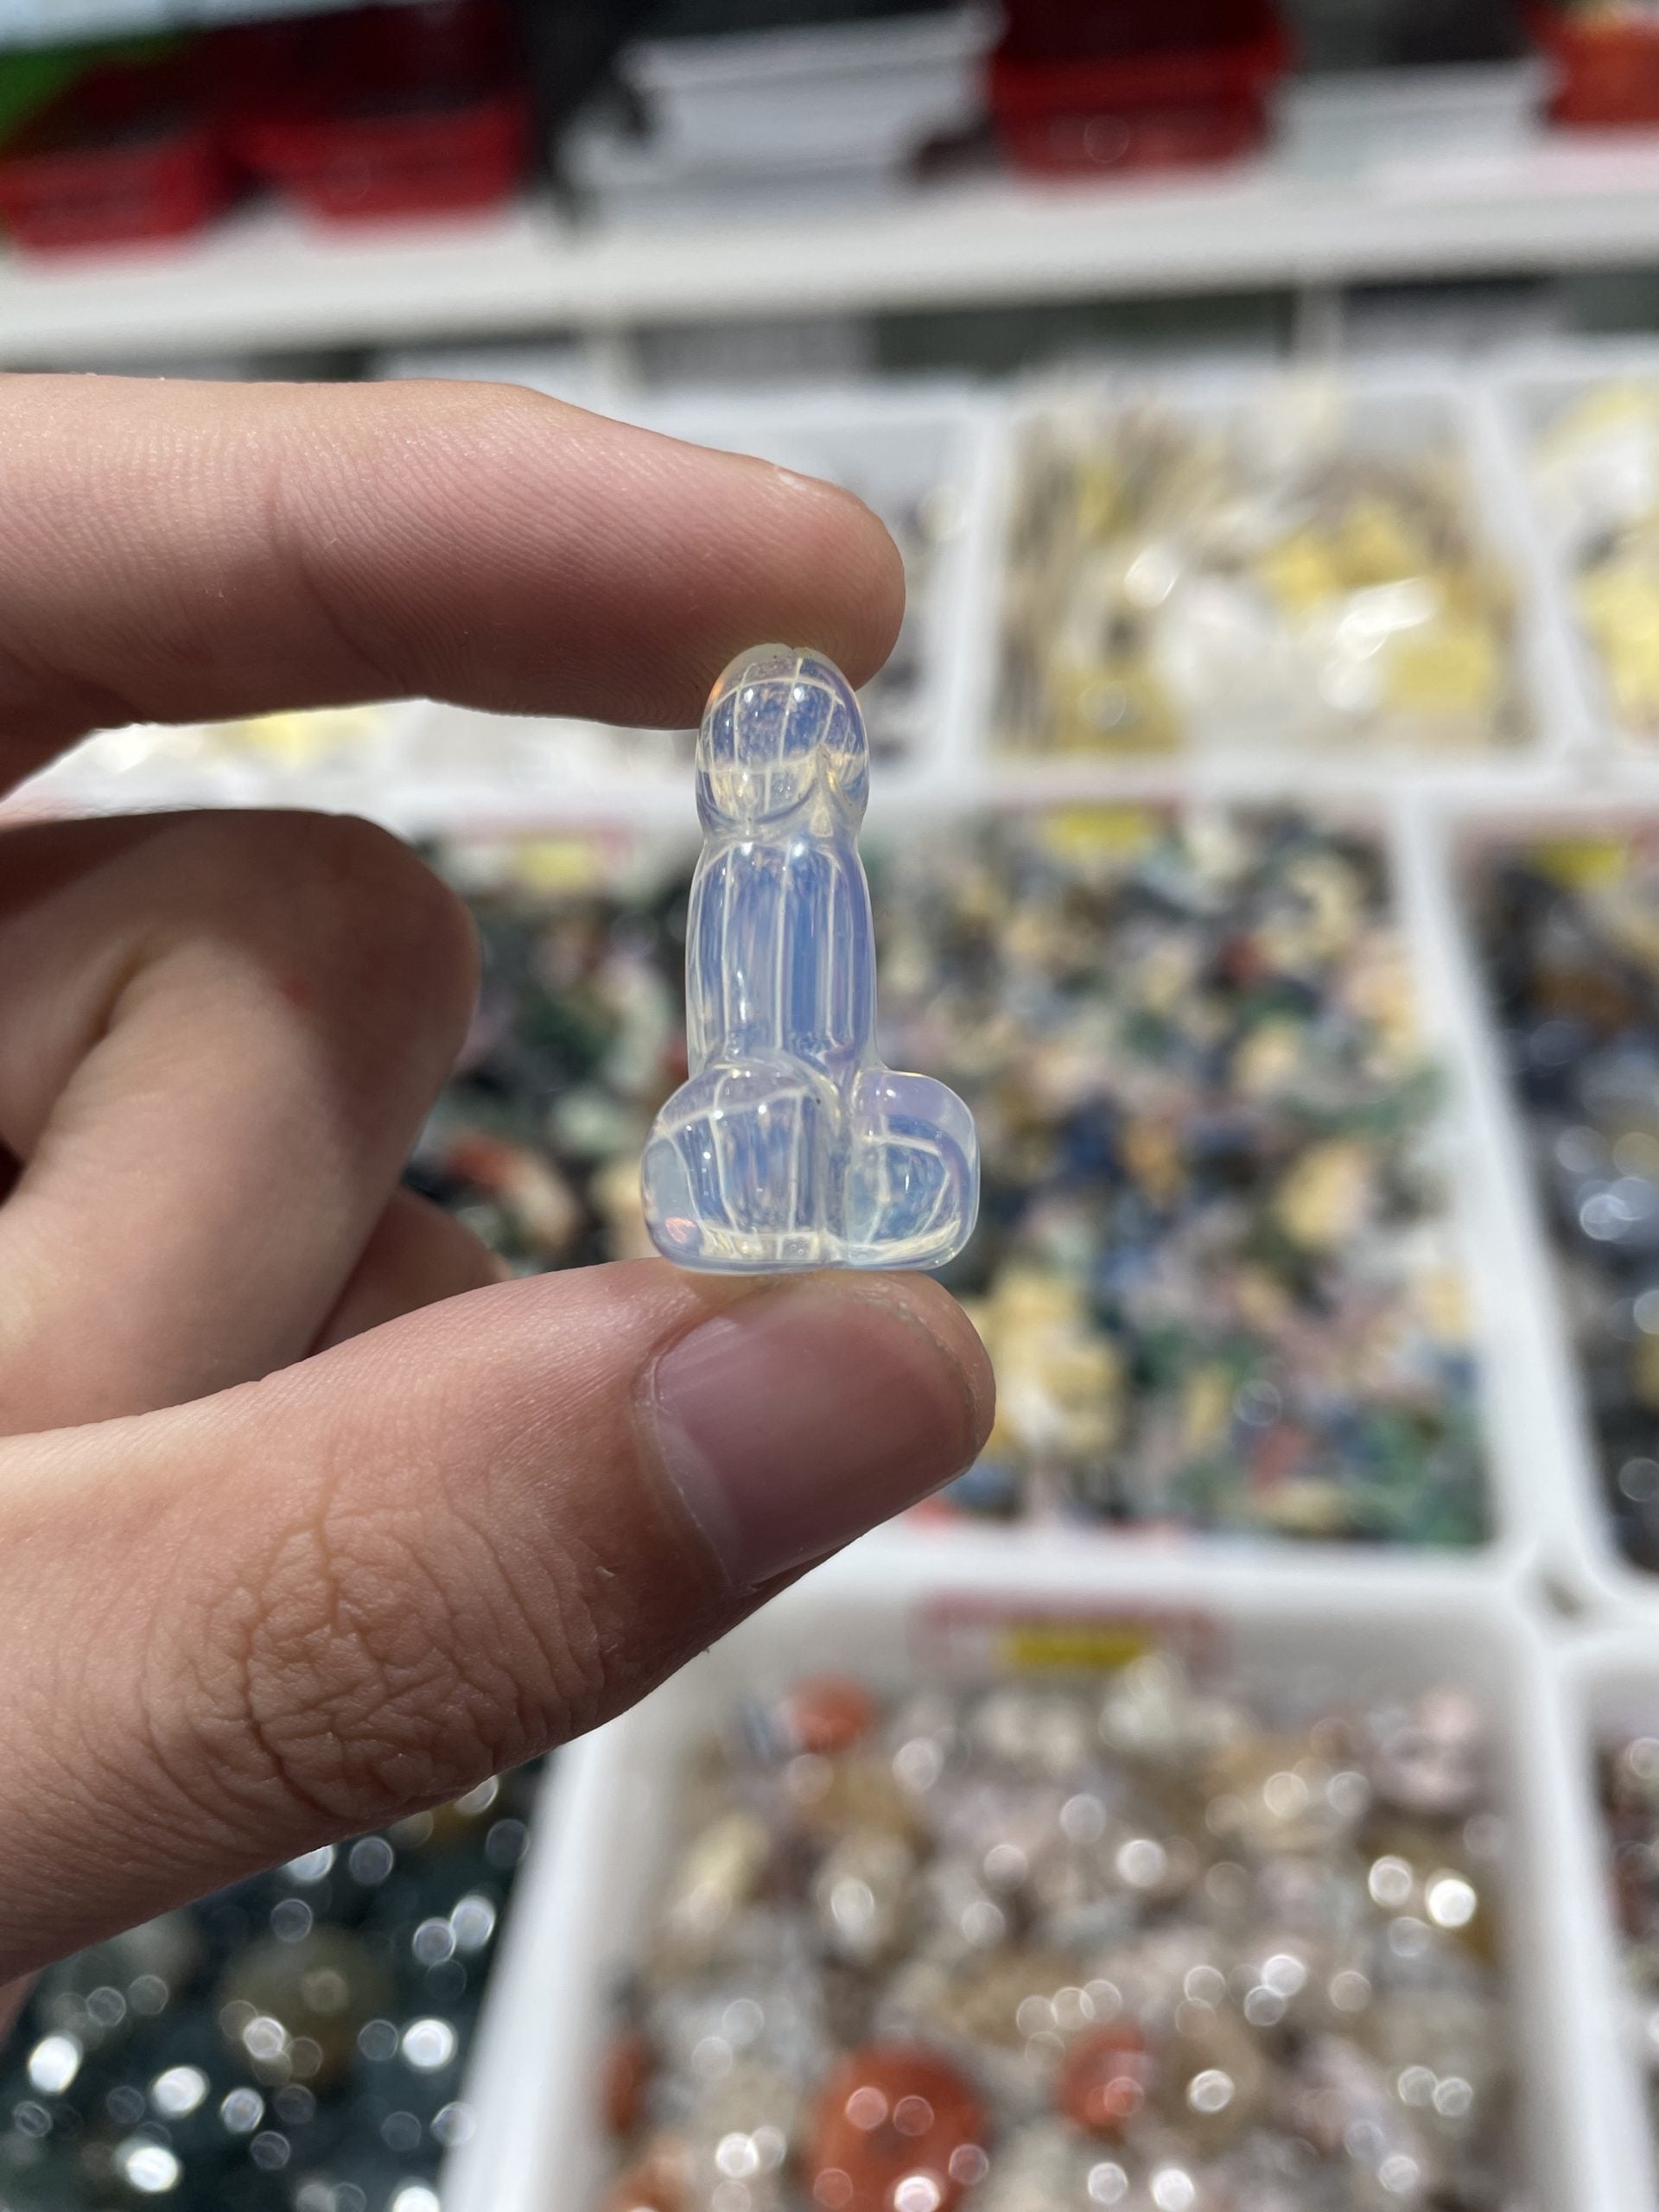 Mini Penis/dingding